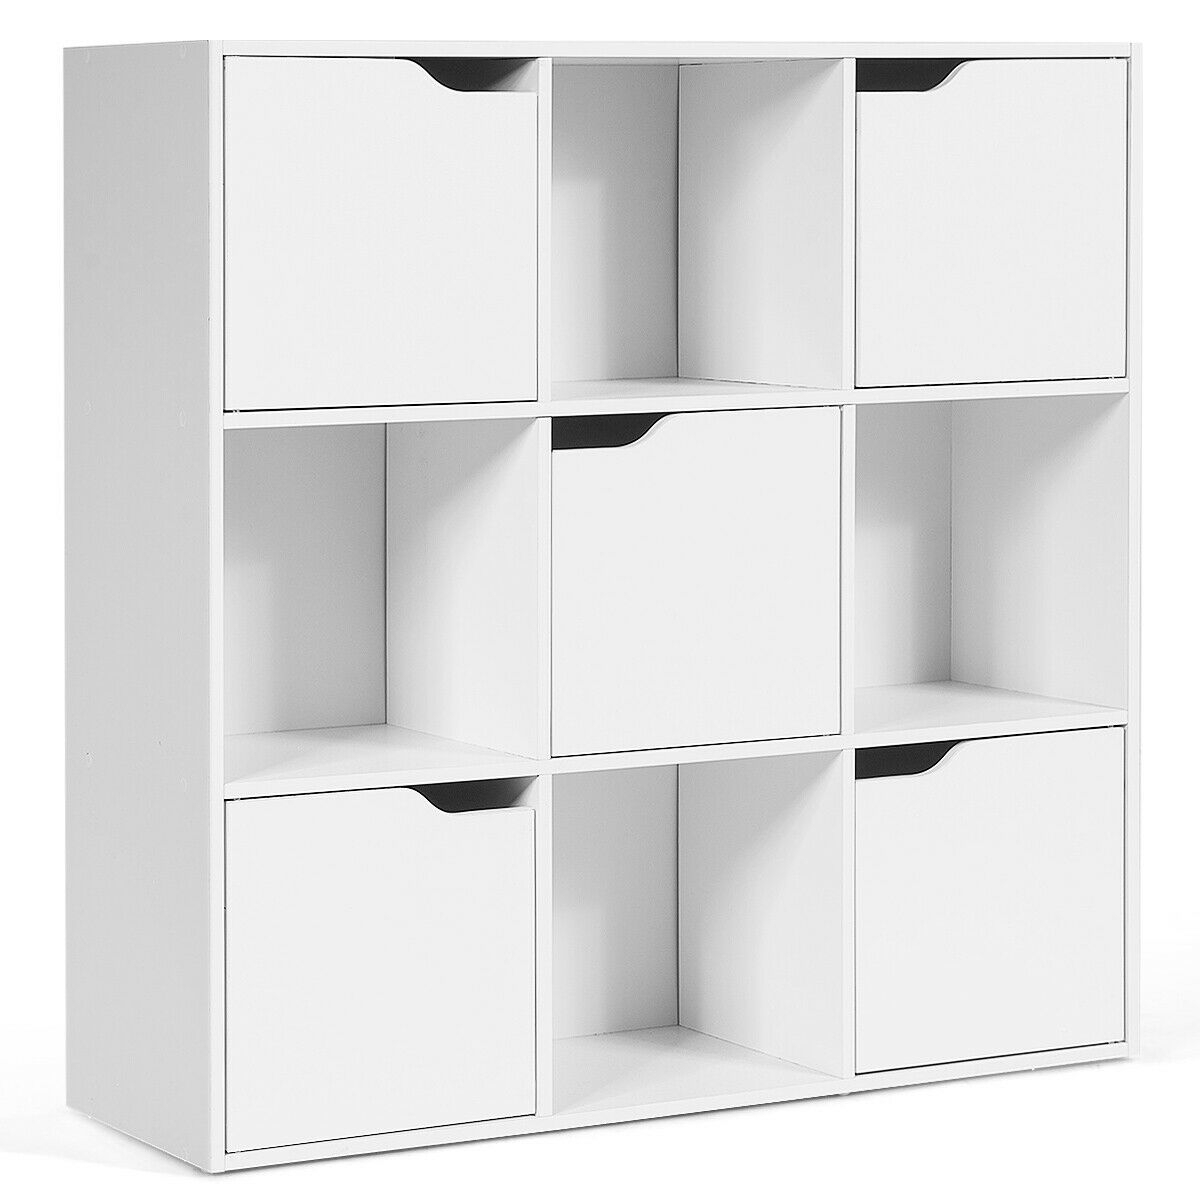 9 Cube Bookcase Cabinet Wood Bookcase Storage Shelves Room Divider Organization